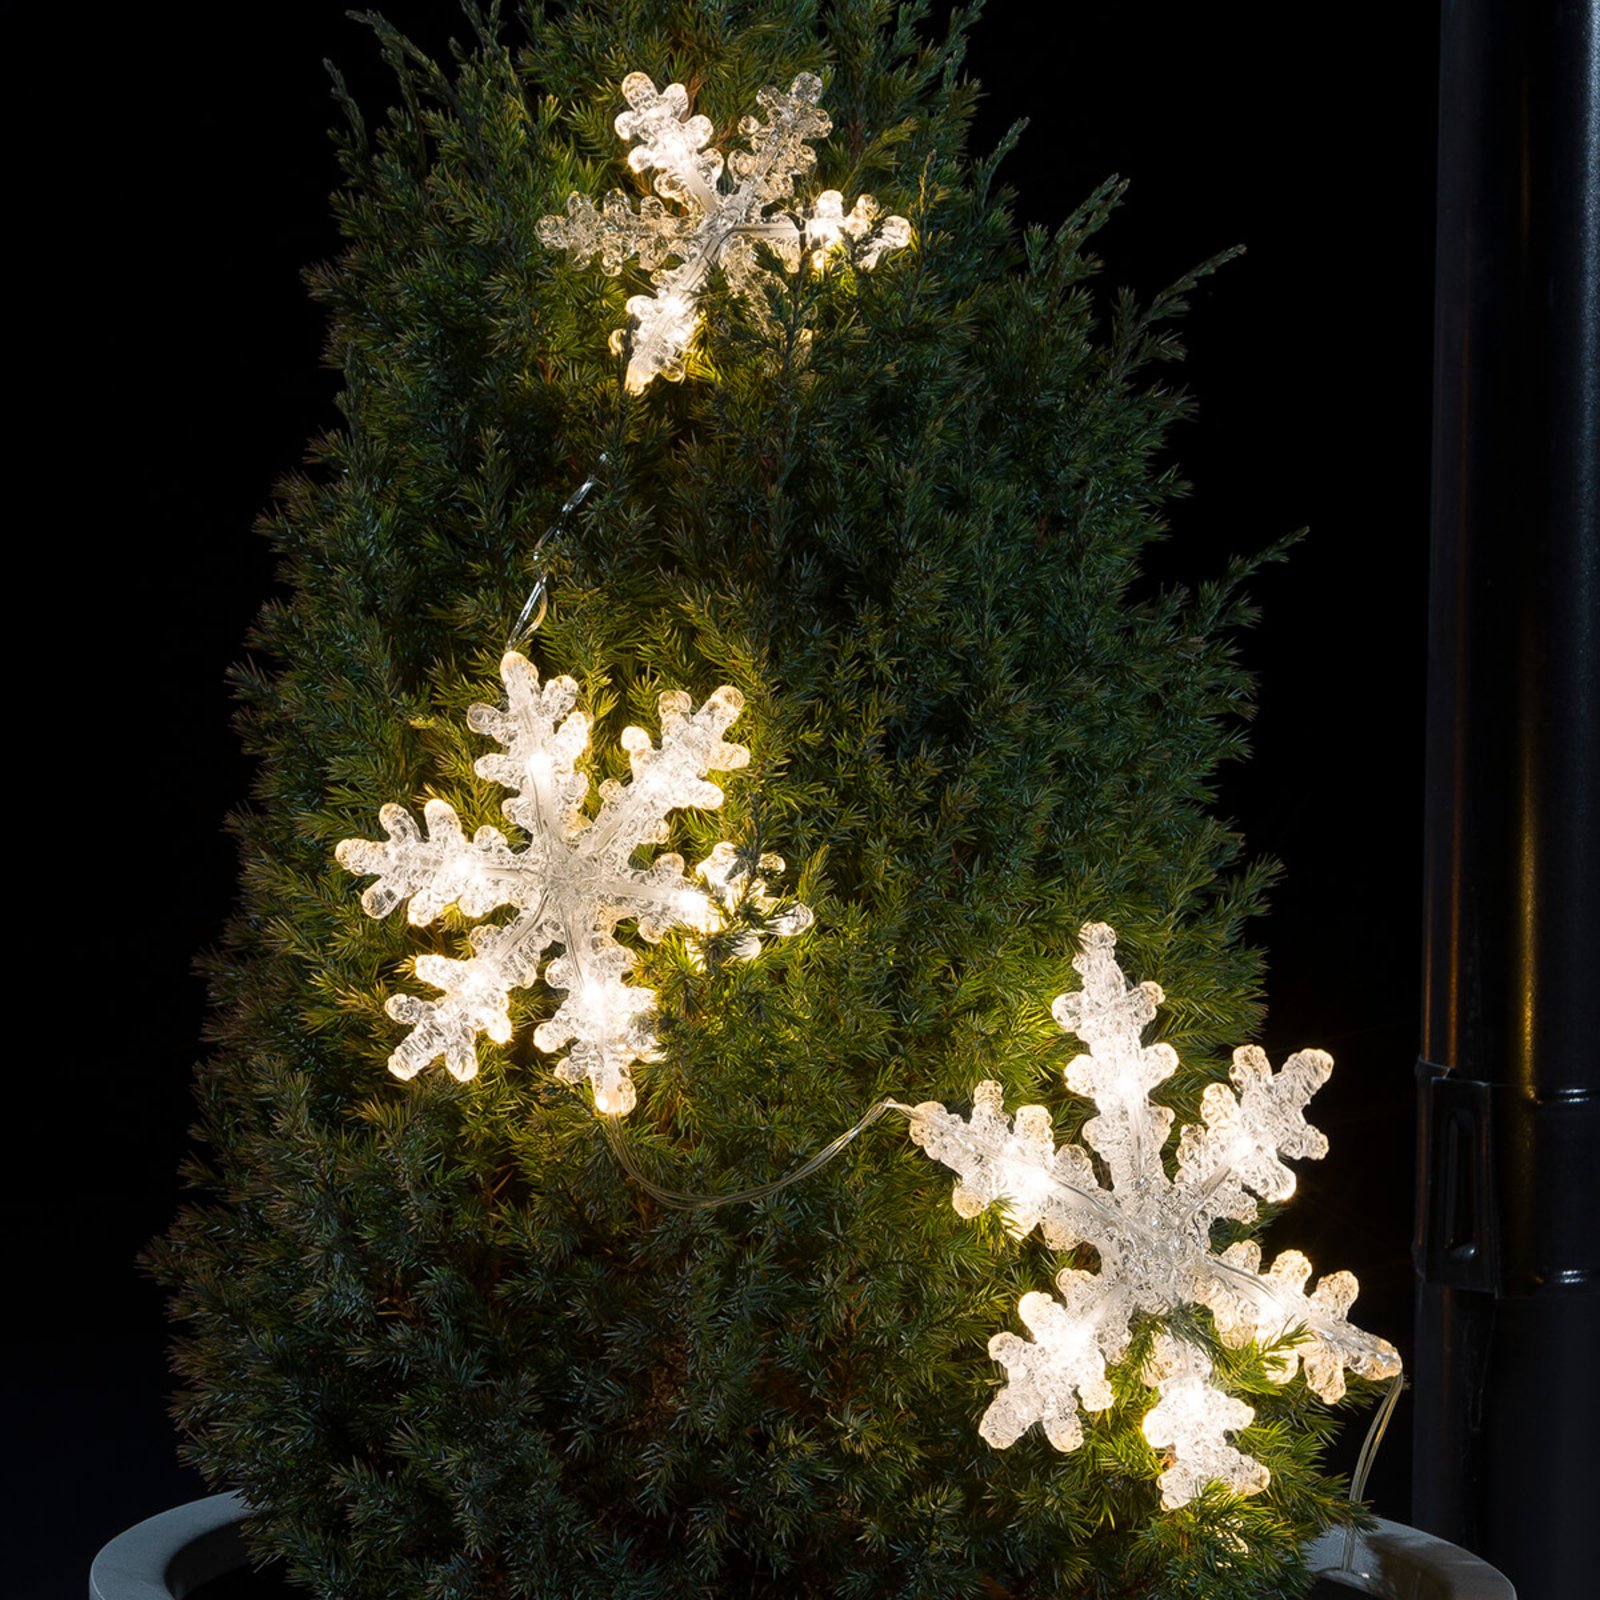 Three-piece LED string lights Snowflakes